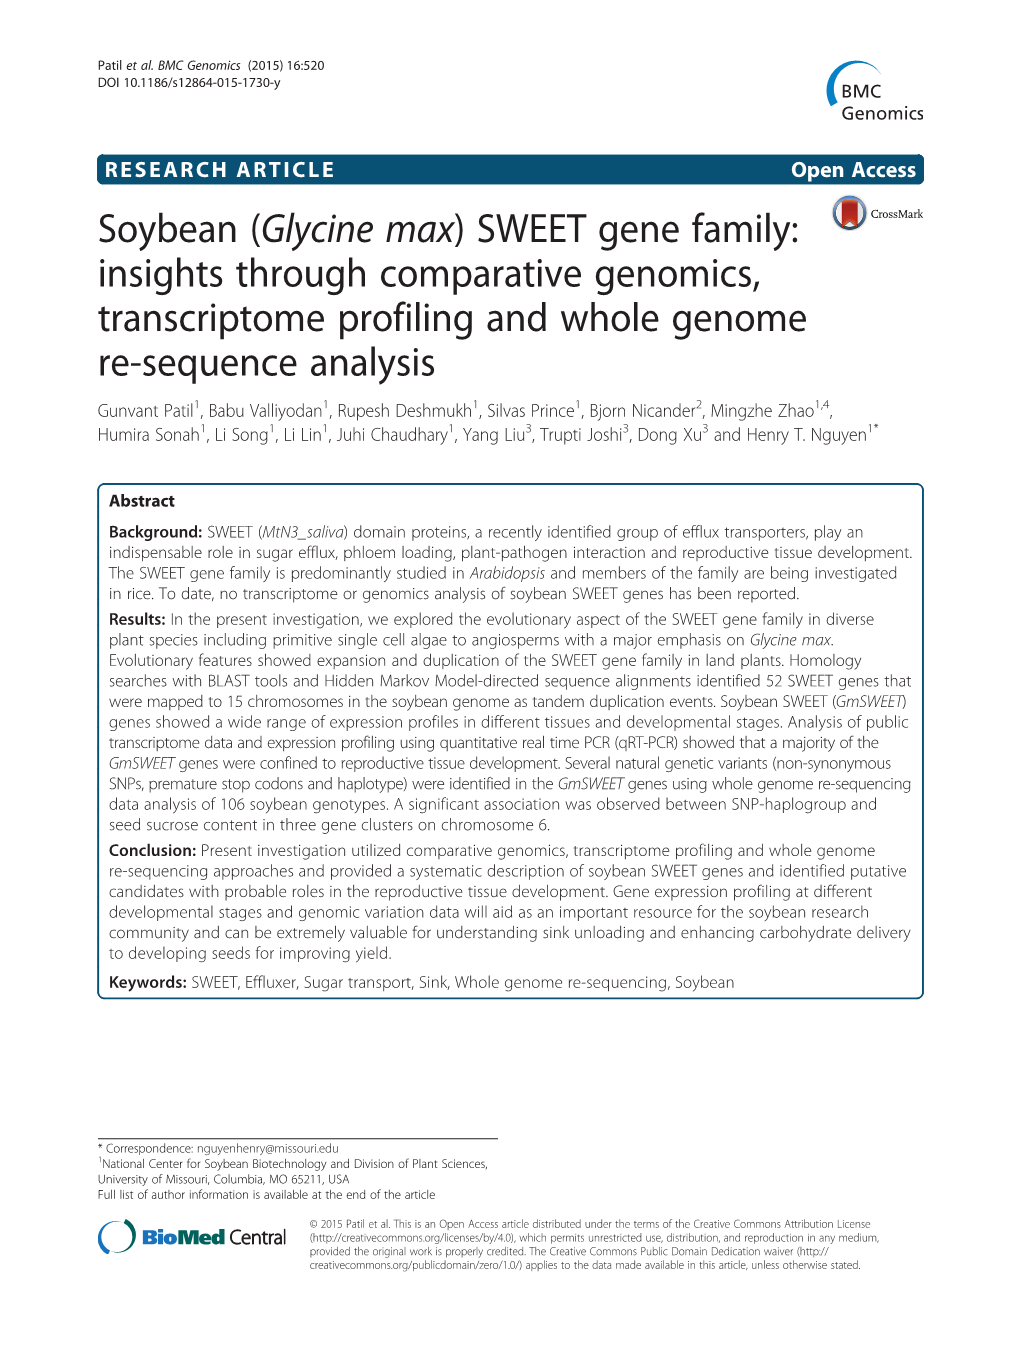 Soybean (Glycine Max) SWEET Gene Family